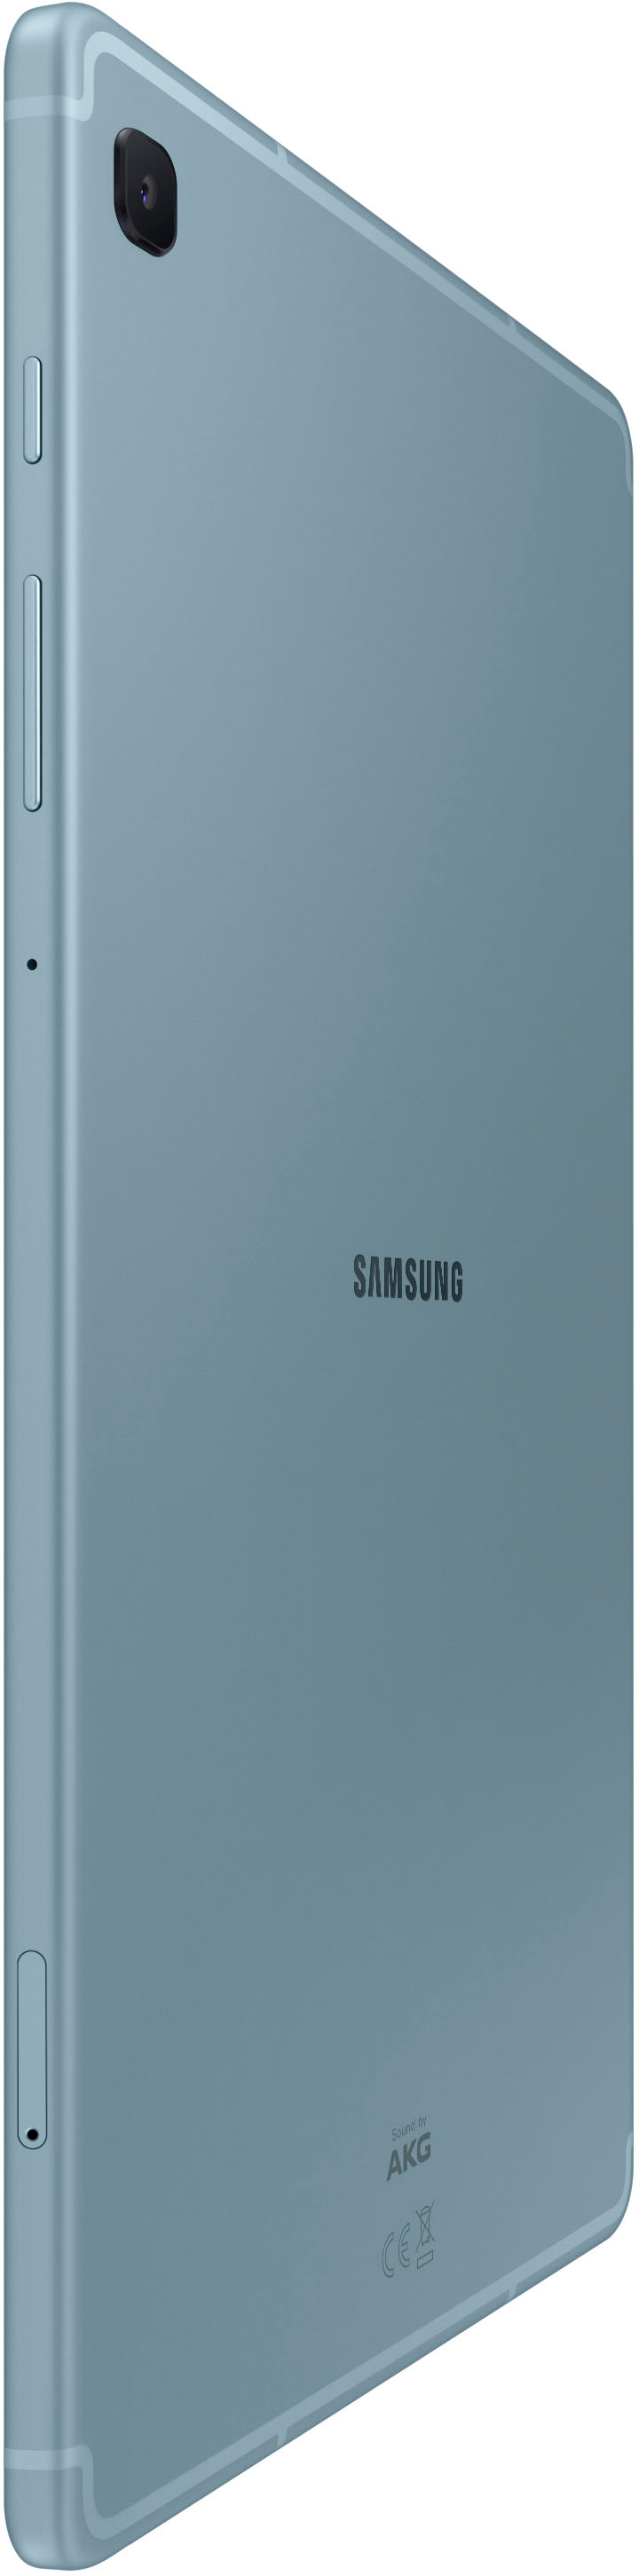 Samsung Galaxy Tab S6 Lite (2022) 10.4 128GB Wi-Fi Oxford Gray  SM-P613NZAEXAR - Best Buy